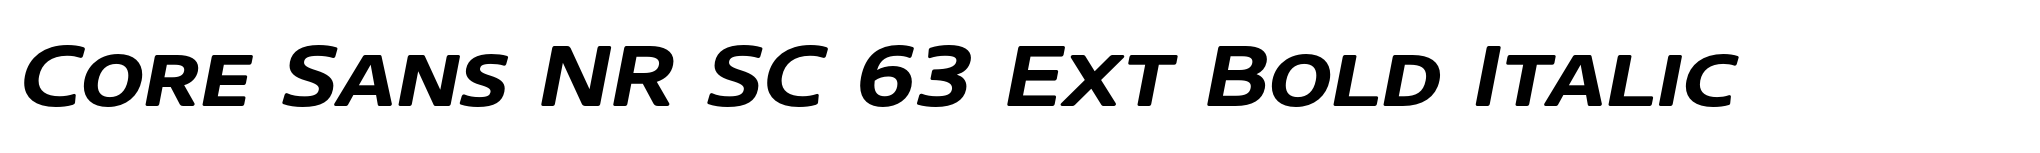 Core Sans NR SC 63 Ext Bold Italic image